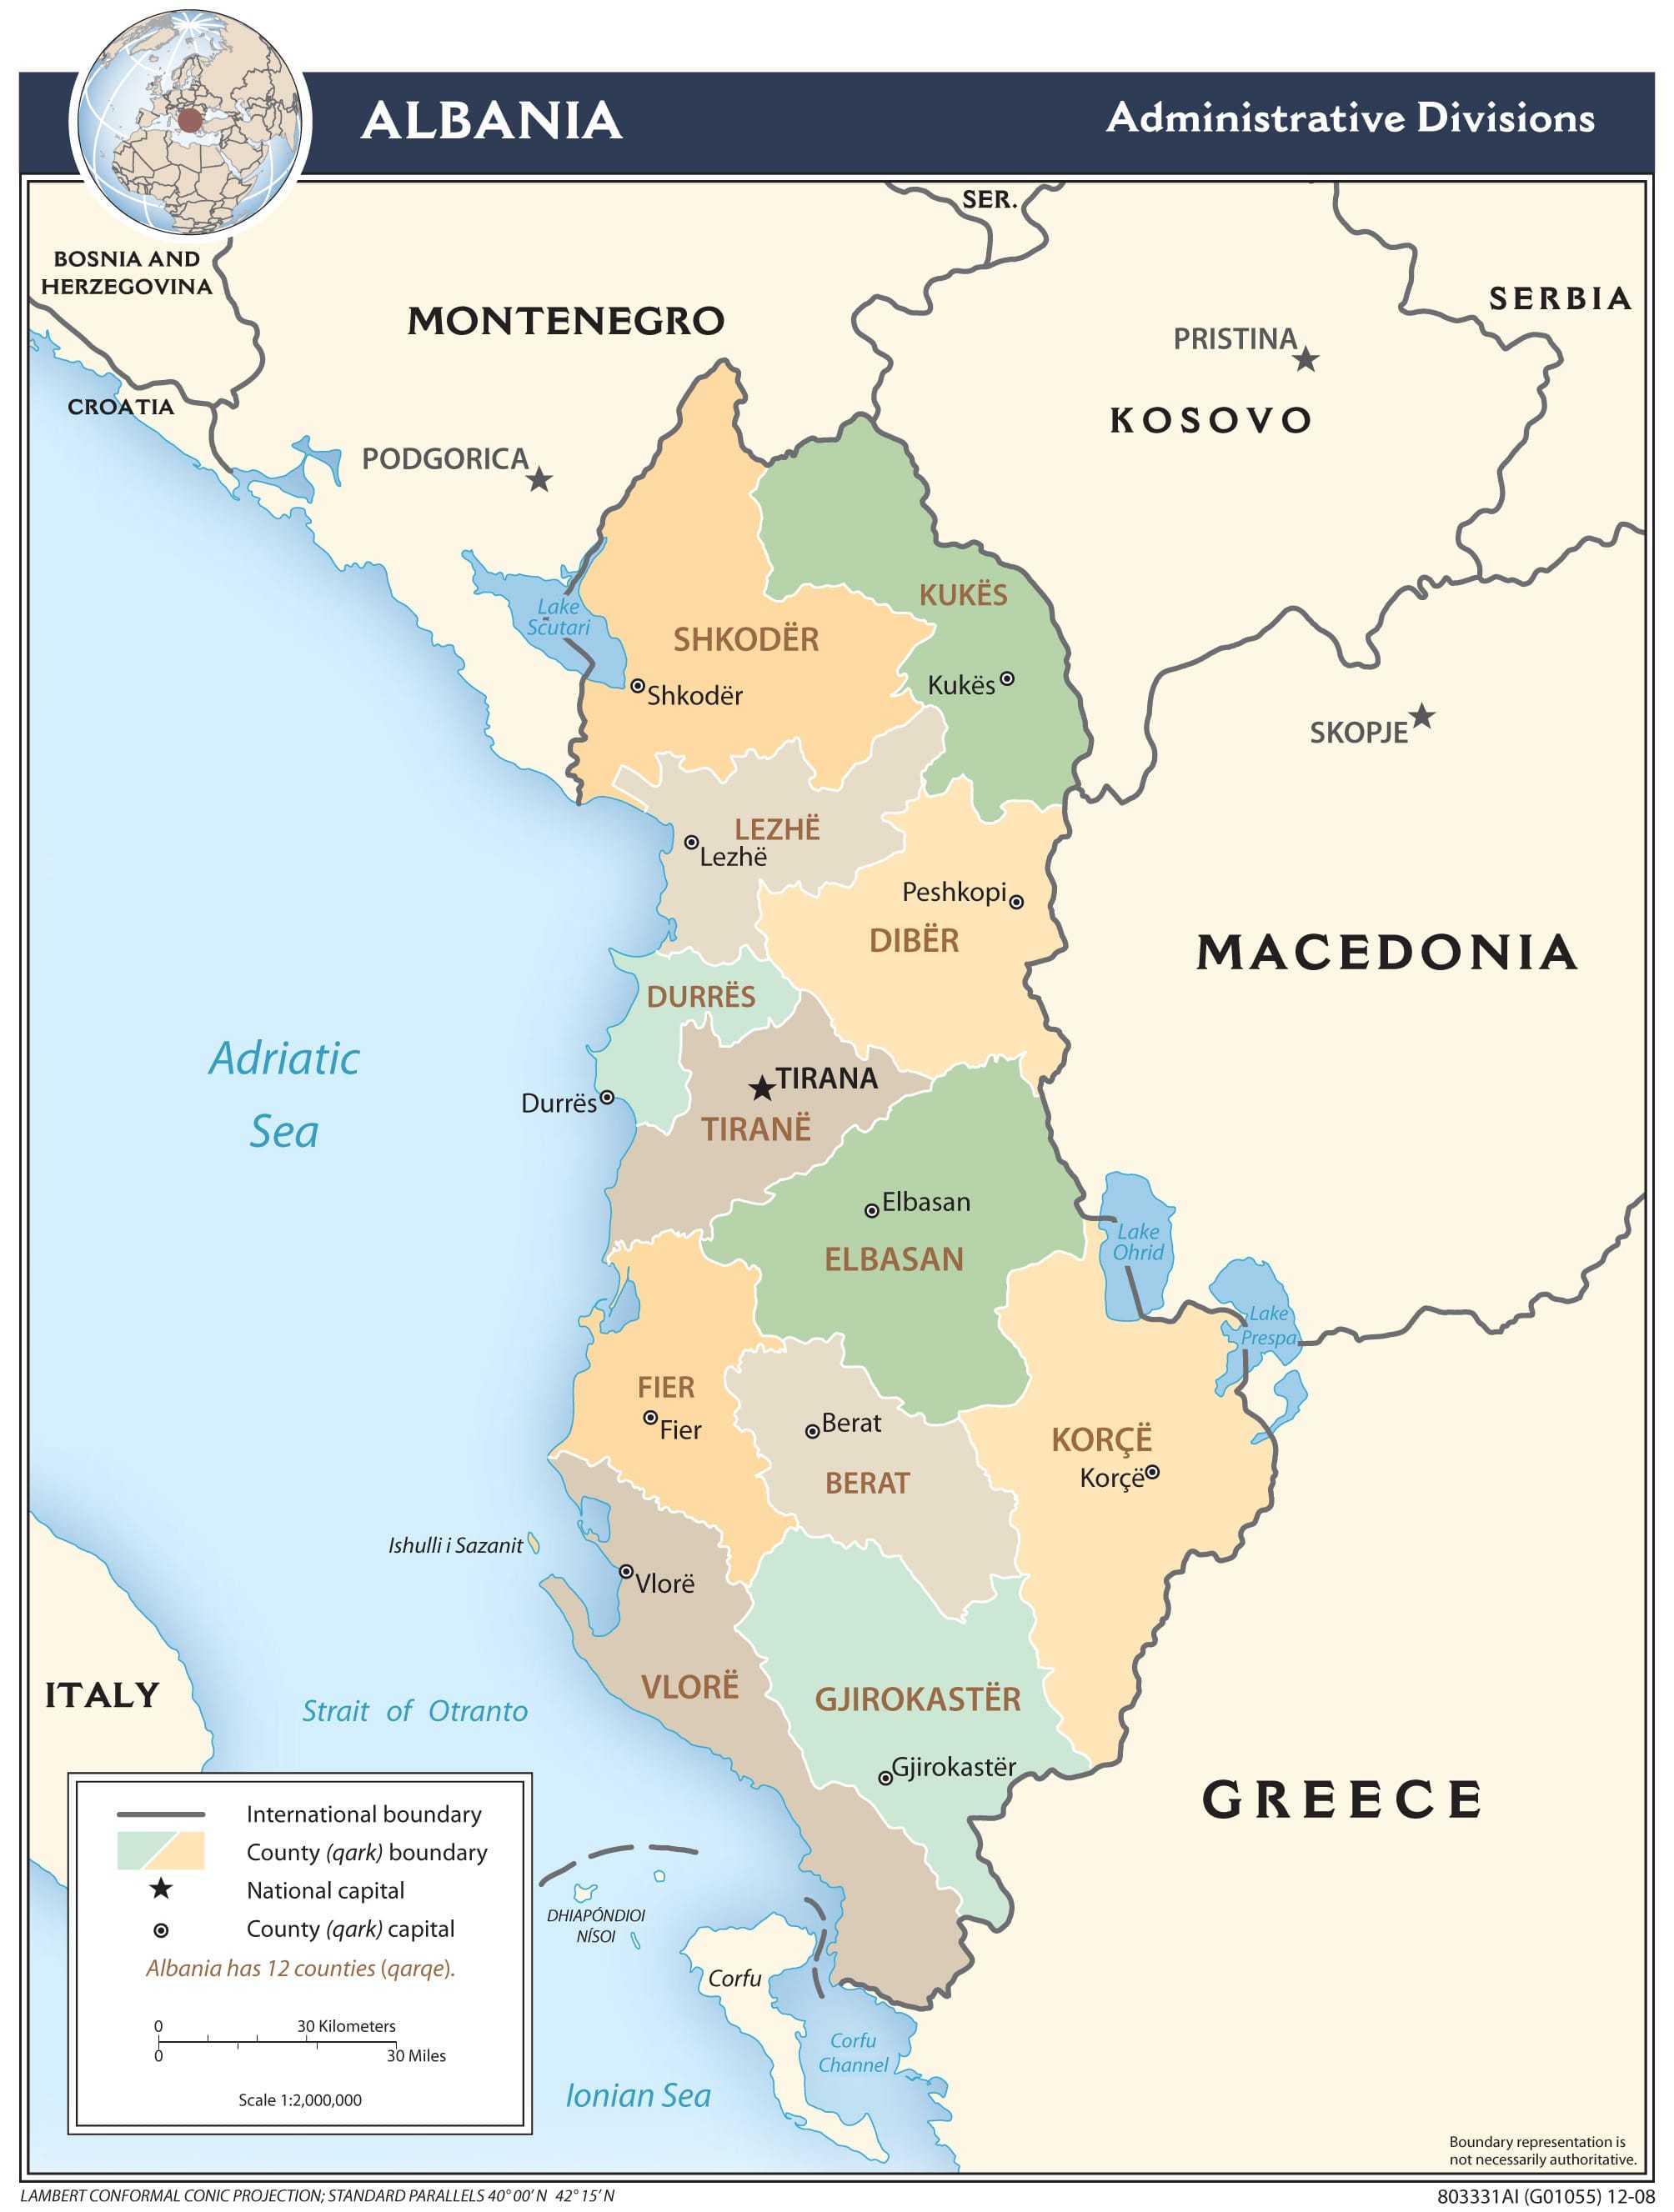 Administrative map of Albania.